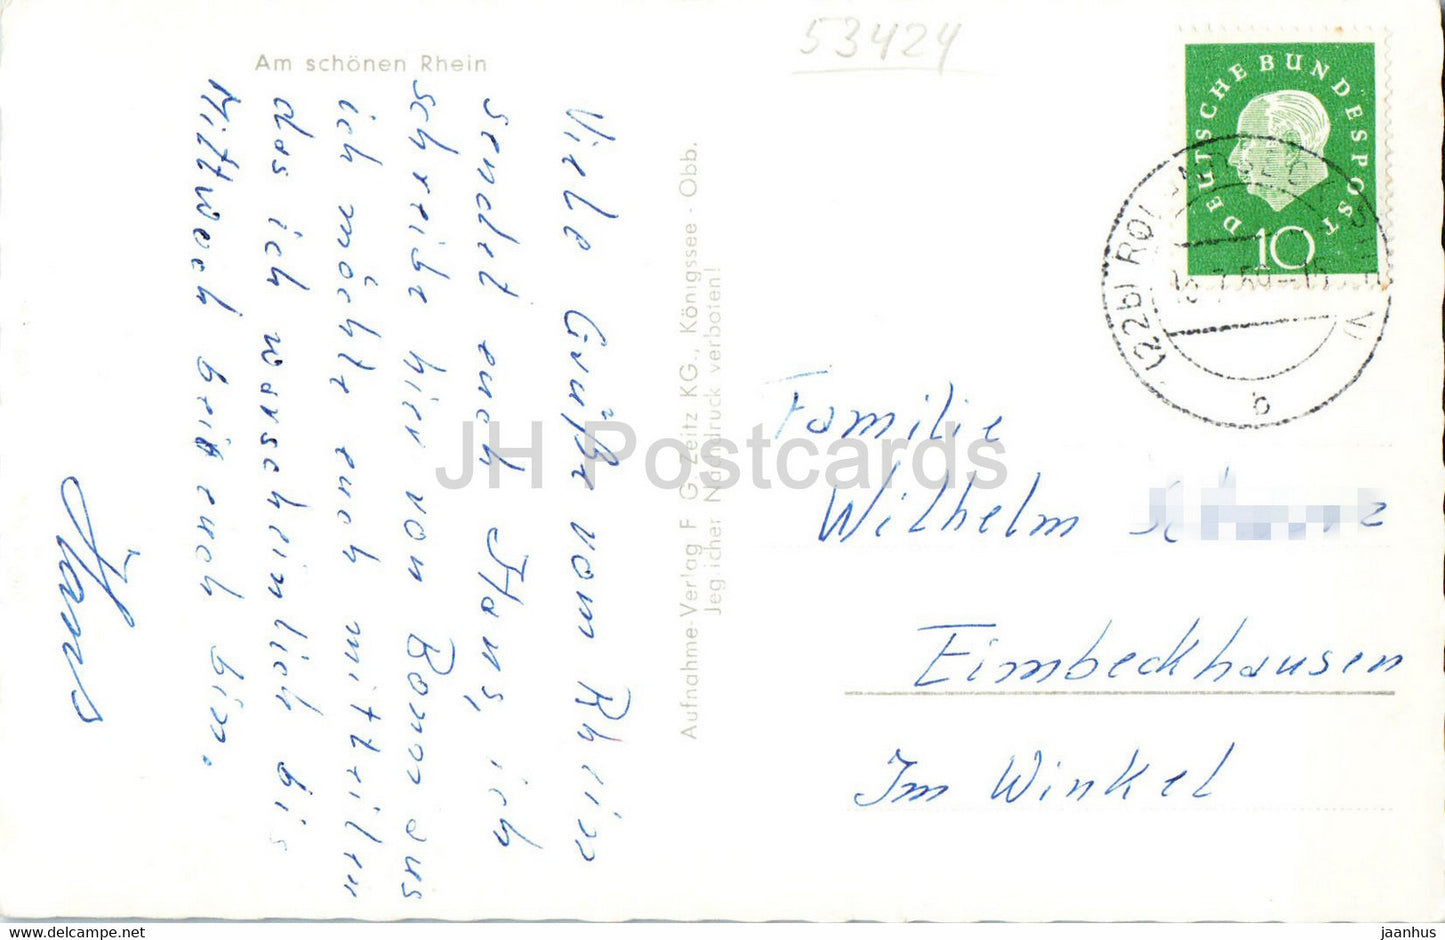 Das Siebengebirge - Konigswinter - Petersberg - Drachenfels - Rolandsbogen - old postcard - 1959 - Germany - used